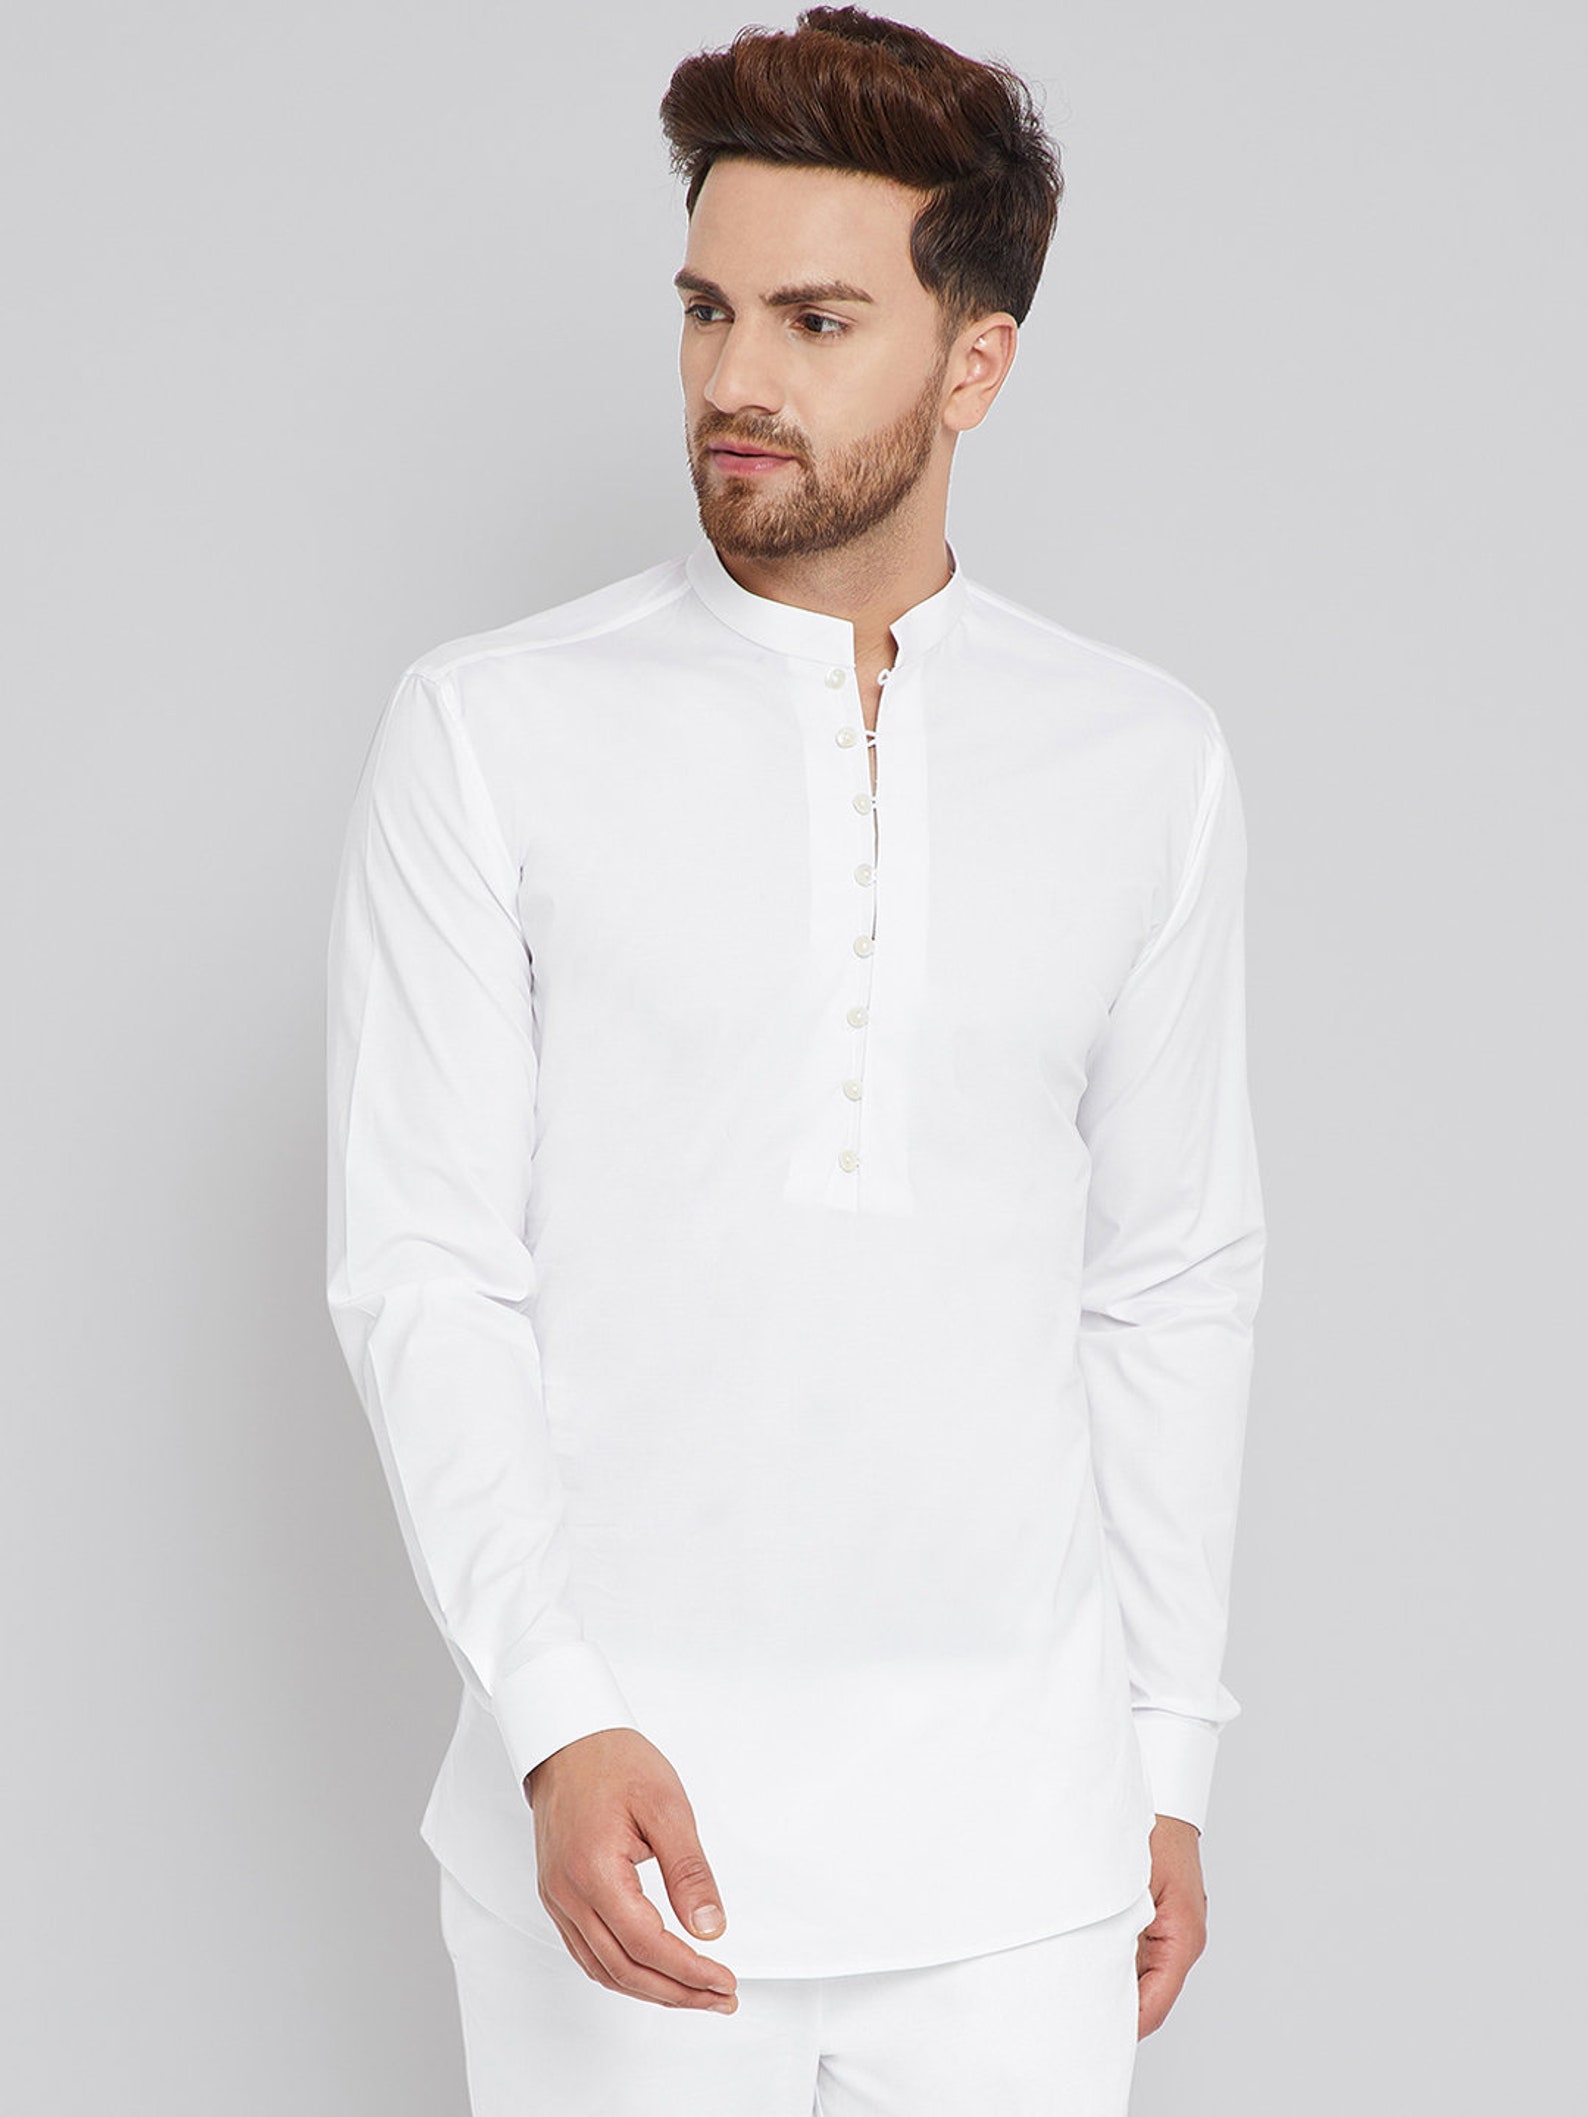 Indian Shirt Kurta Solid Shirt Men Top Tunic White Color Short - Etsy UK